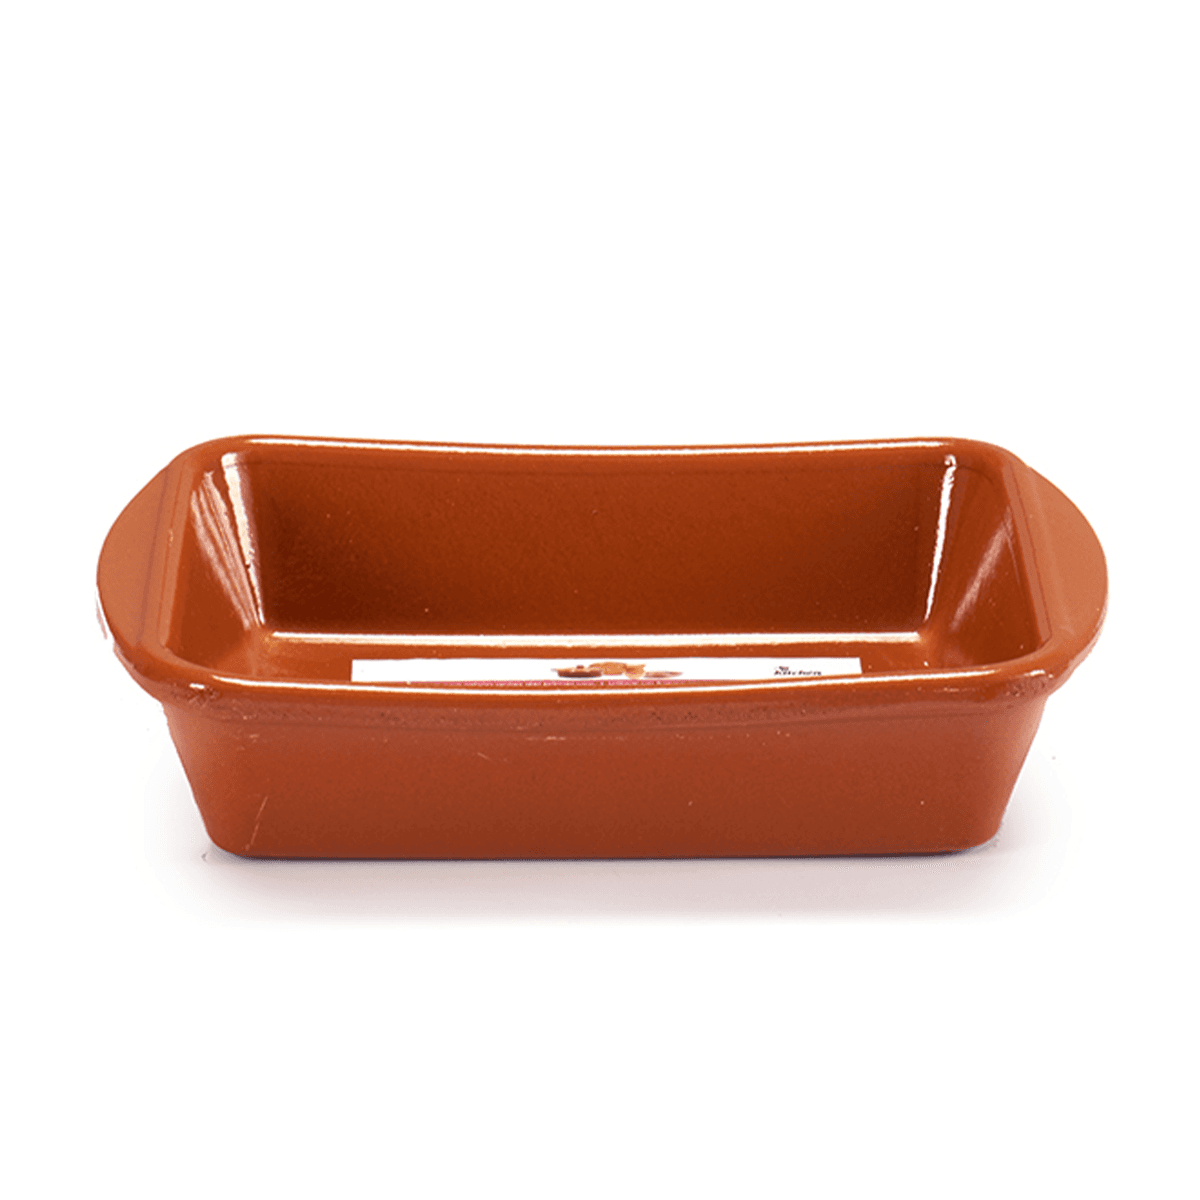 صحن فخار مستطيل عميق لون بني تيراكوتا 18 سم صناعة اسبانيا من آرت ريجال Arte Regal Brown Clay Deep Rectangular Plate